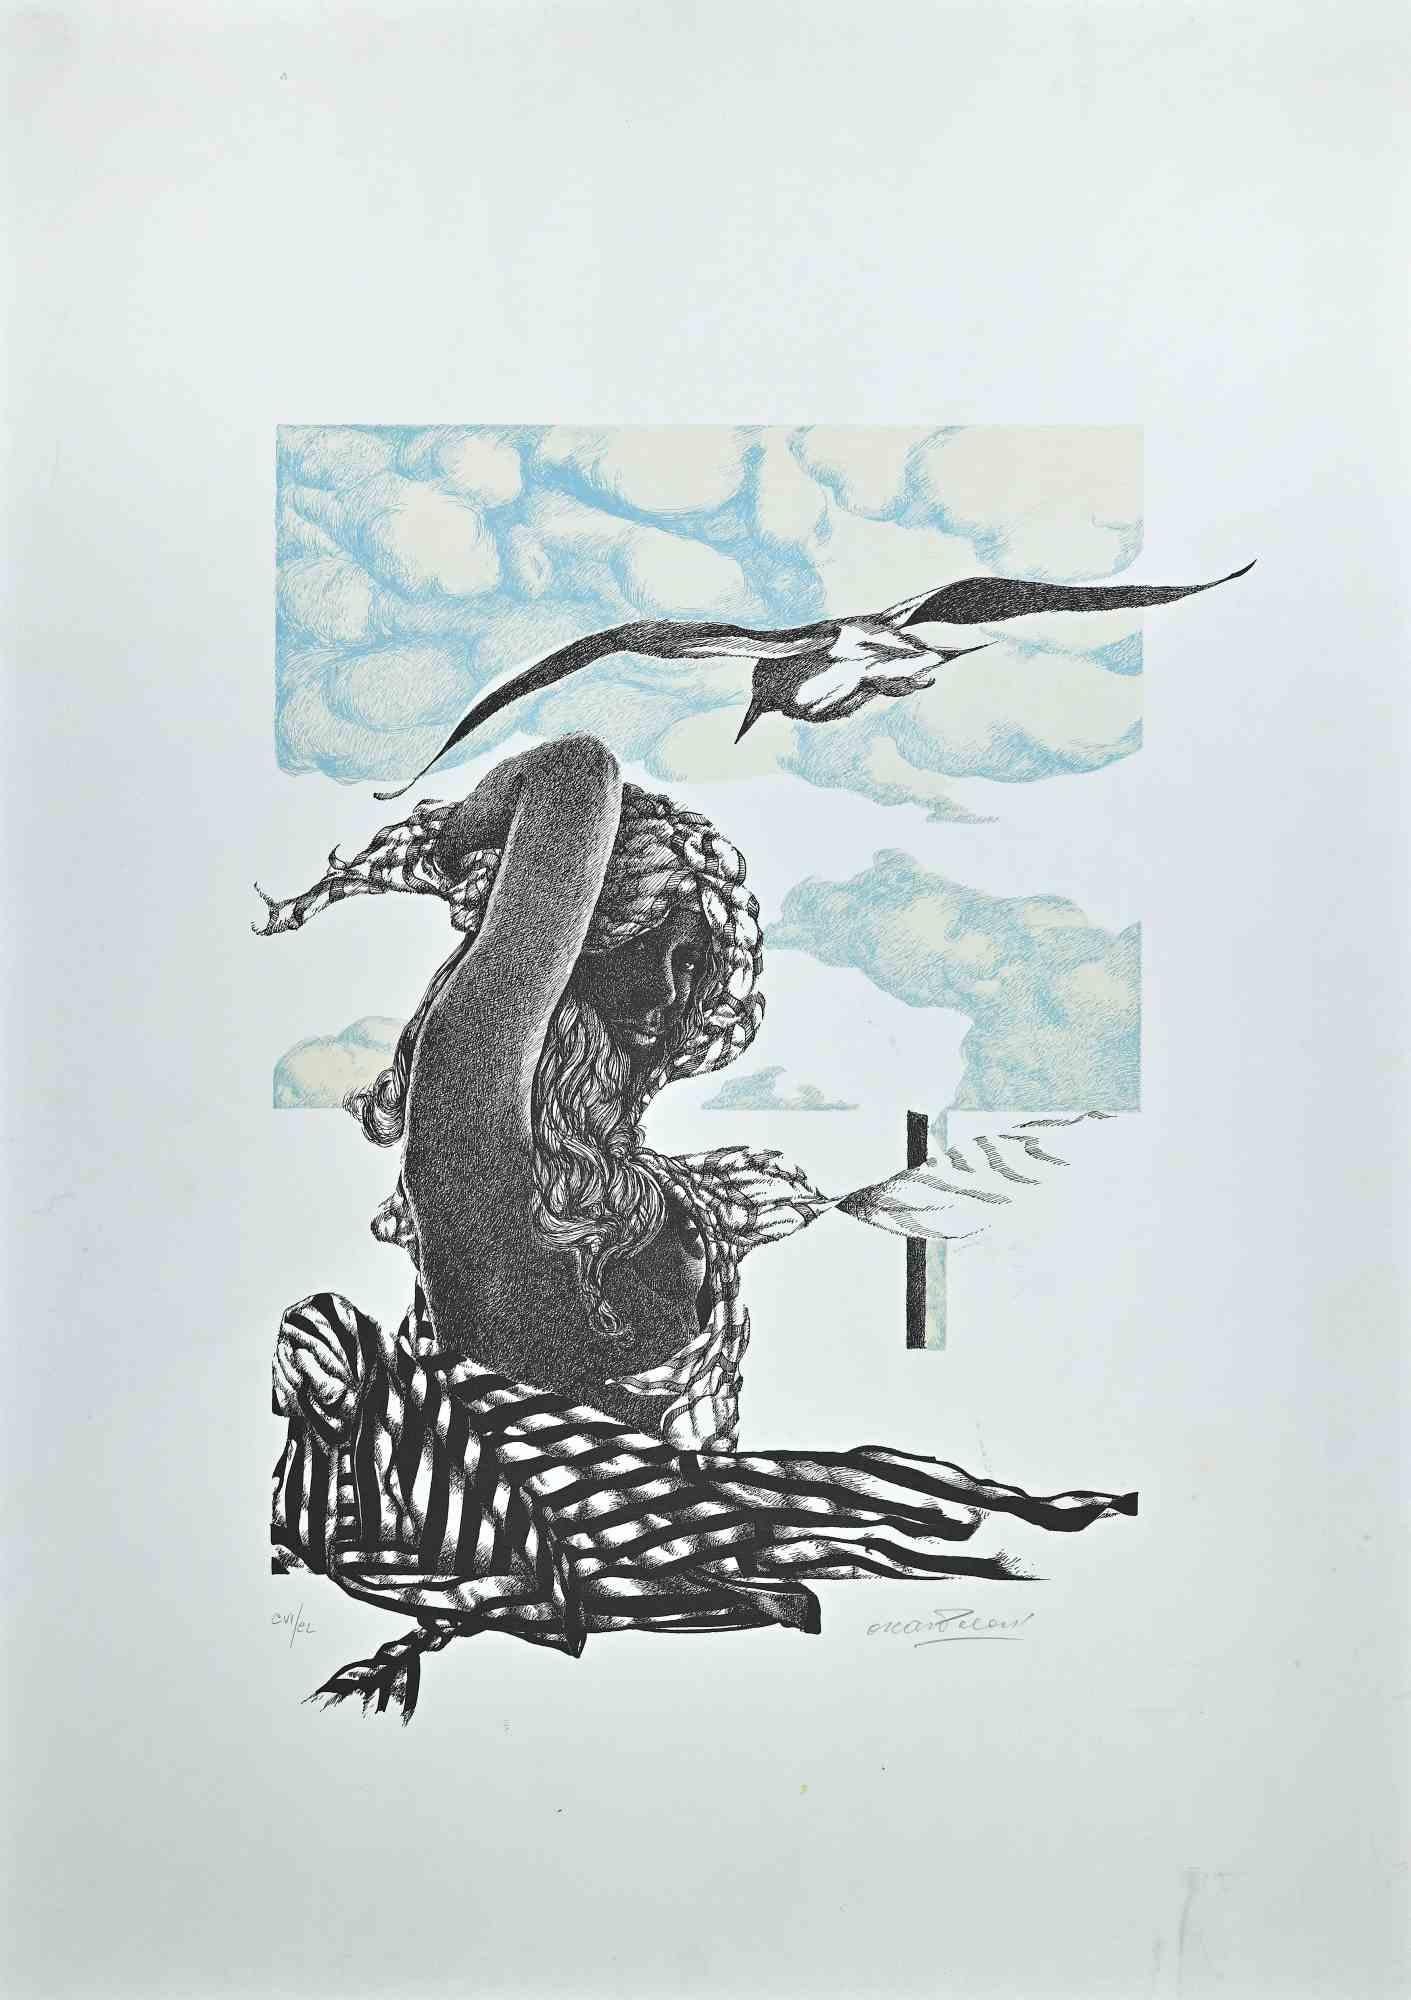 The Woman With Bird  - Original Lithograph by Oscar Pelosi - 1980s